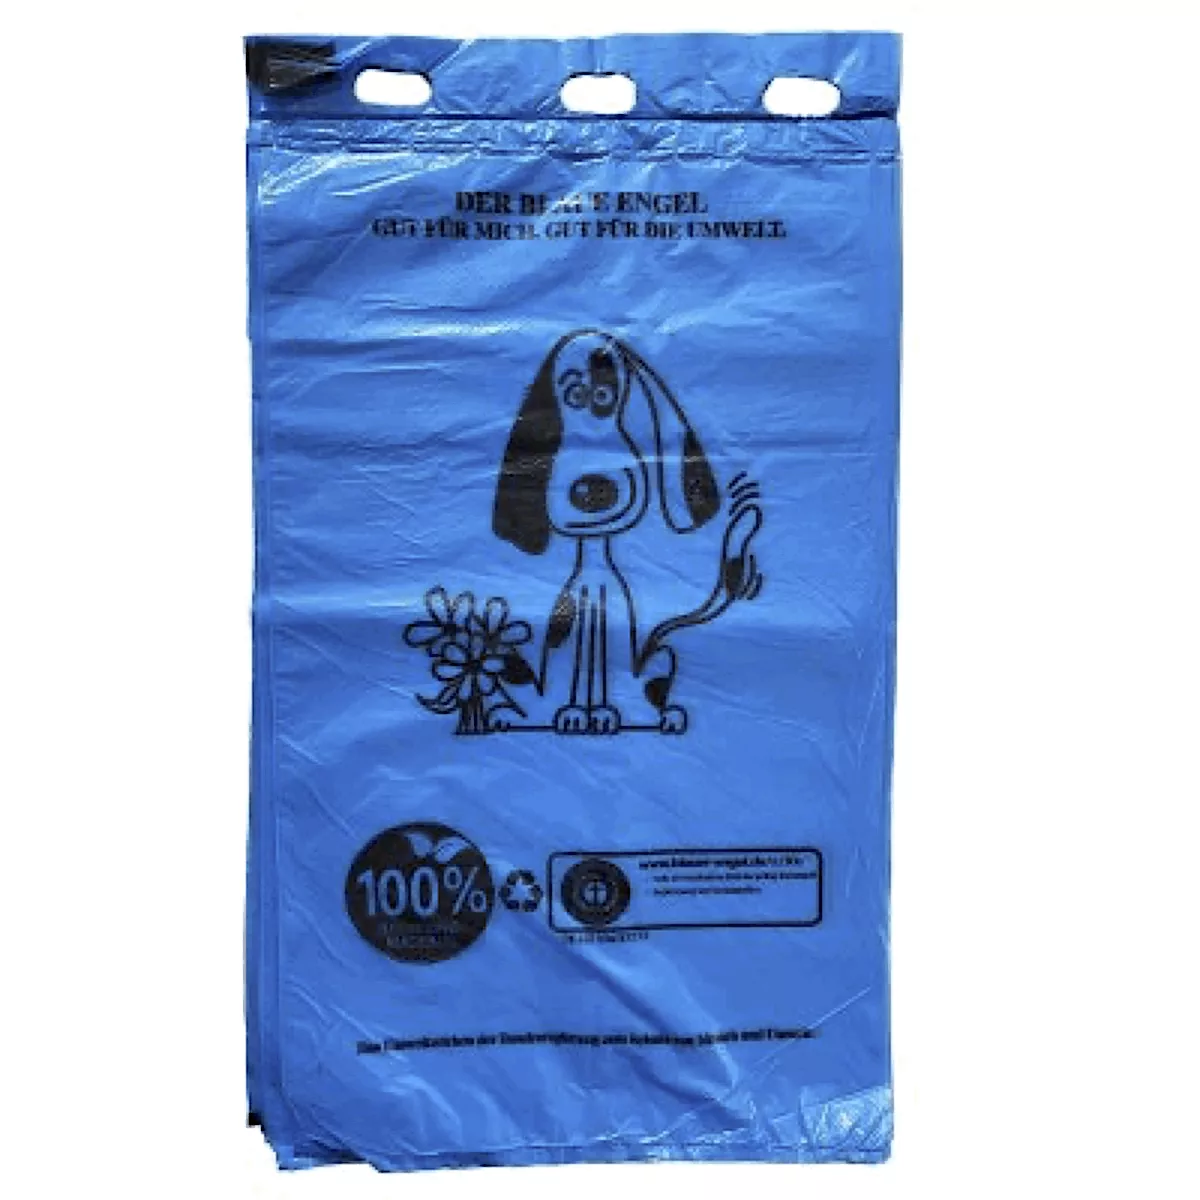 Hundekotbeutel Br. 200 x L. 345 mm, Dicke 20µ, blau, geblockt, (VE 30.000 Beutel)